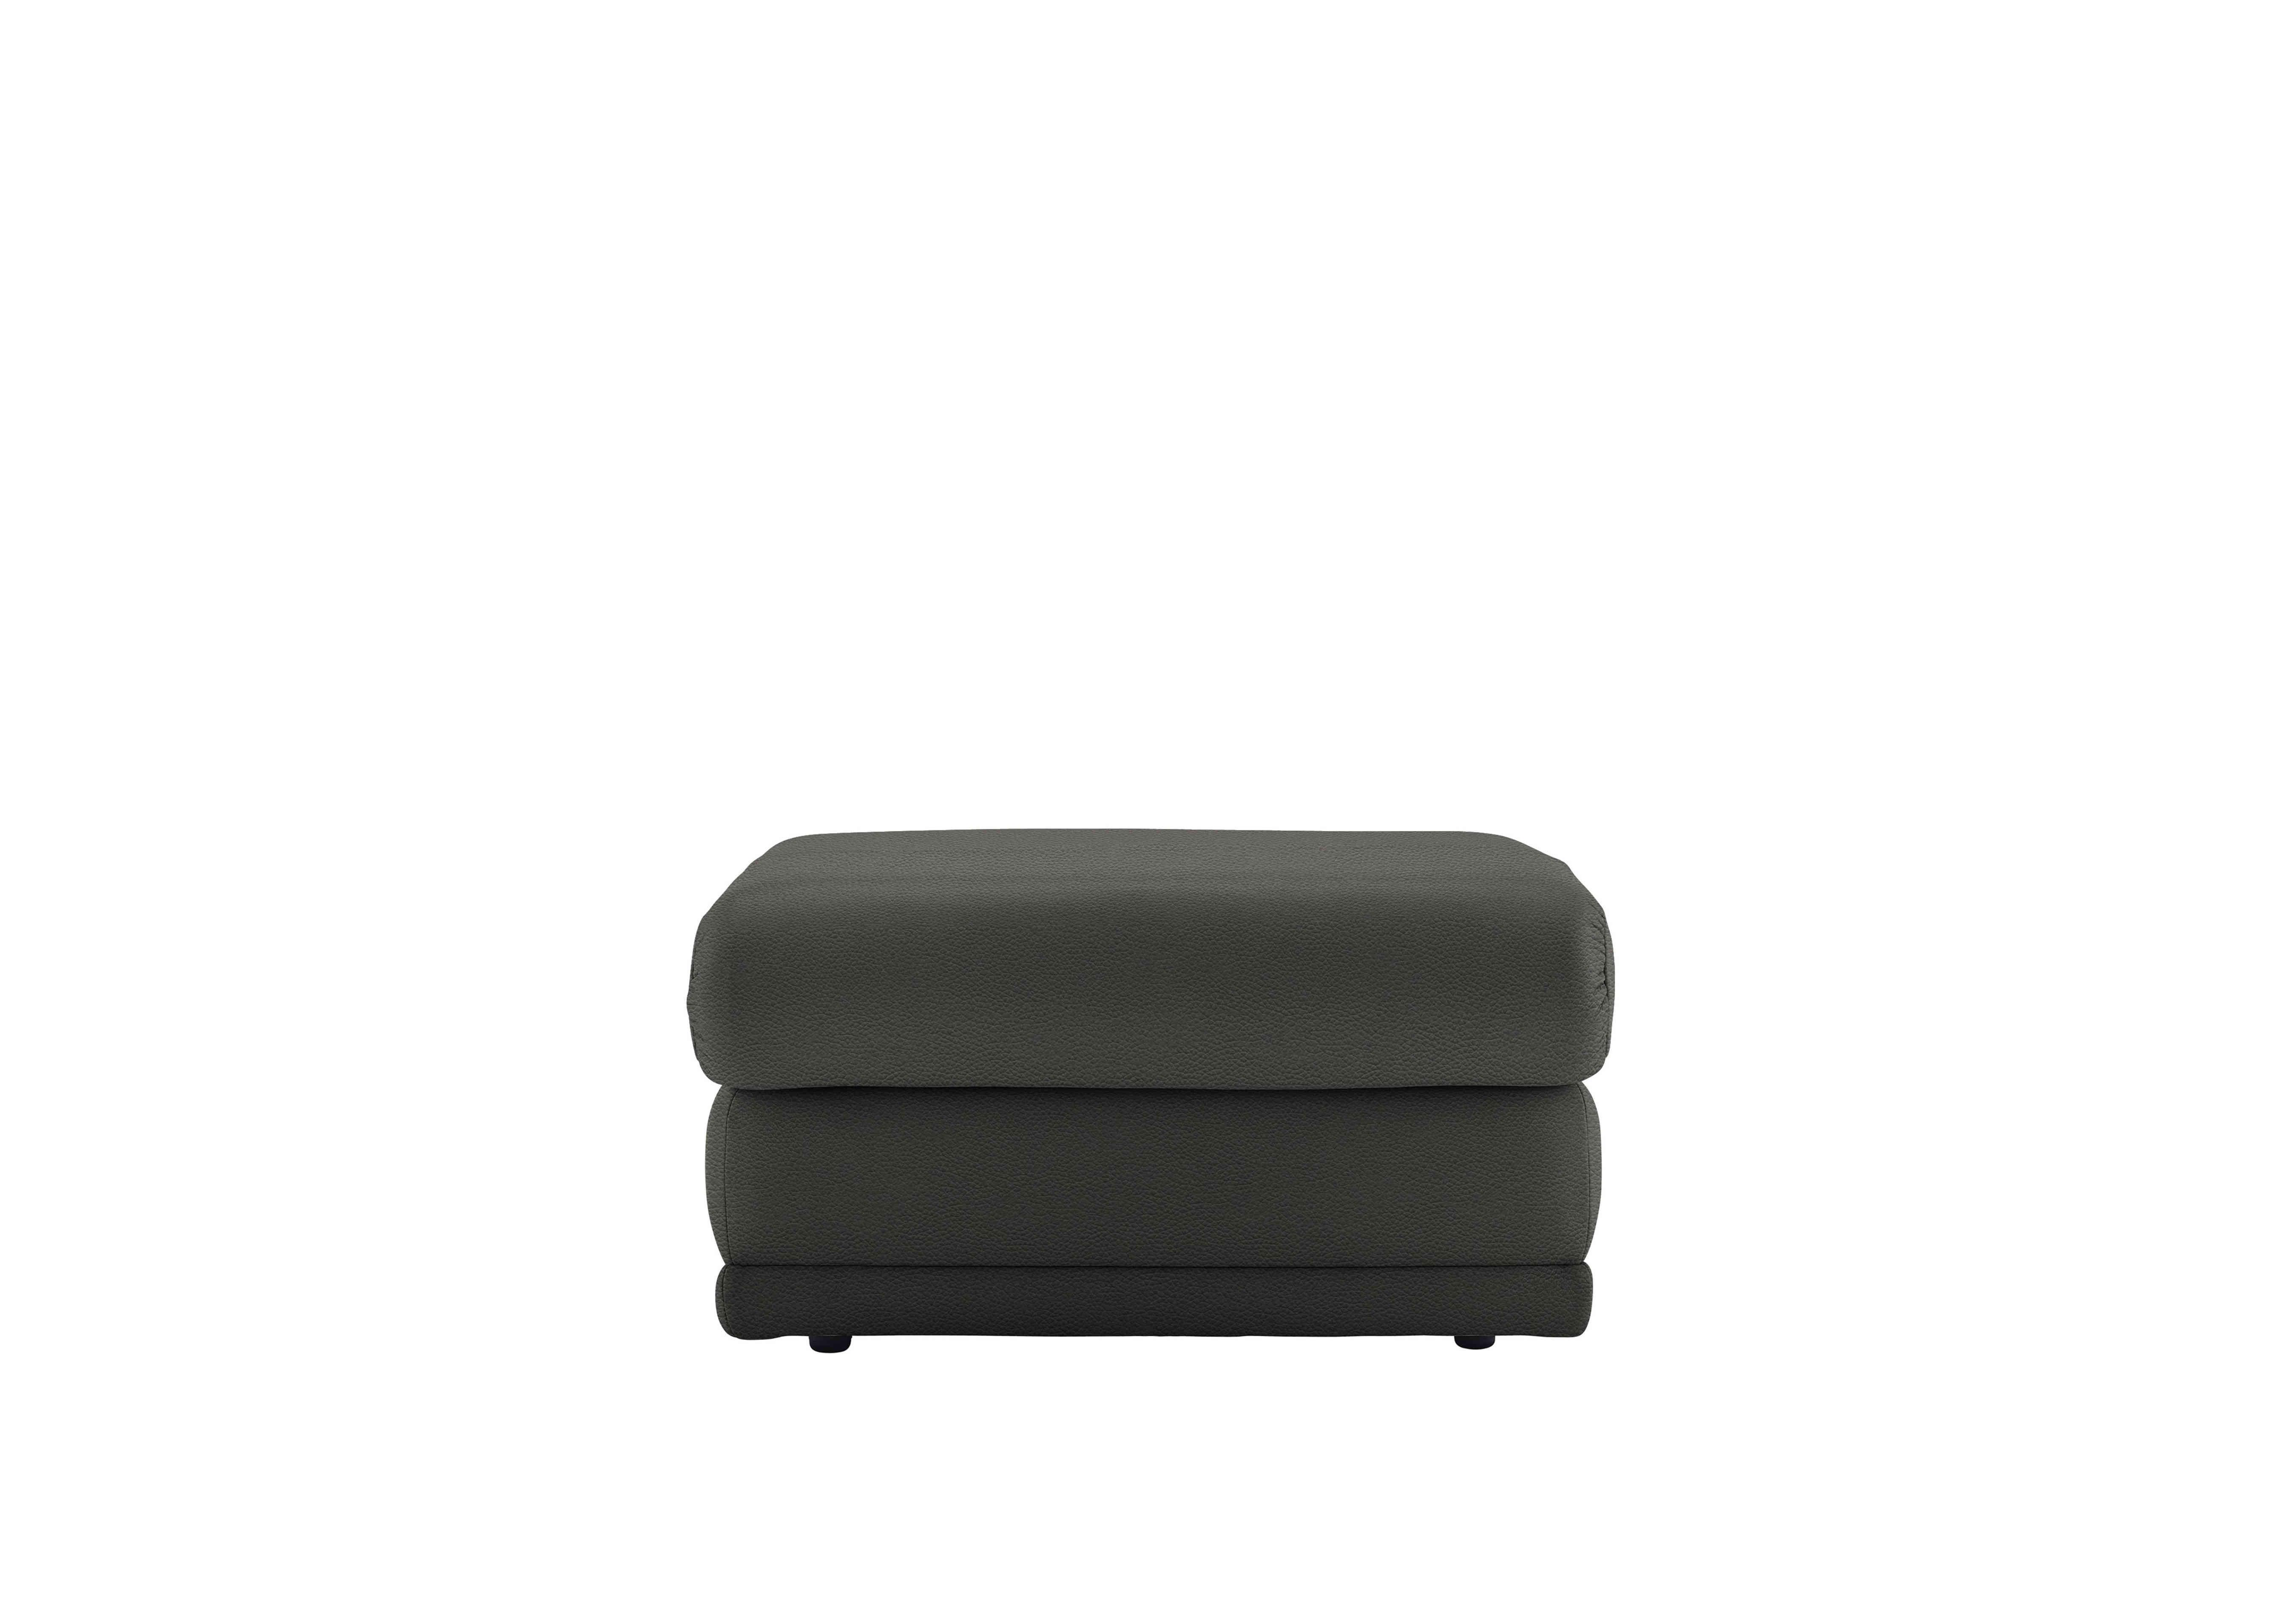 Malvern Leather Storage Footstool in H004 Oxford Black on Furniture Village